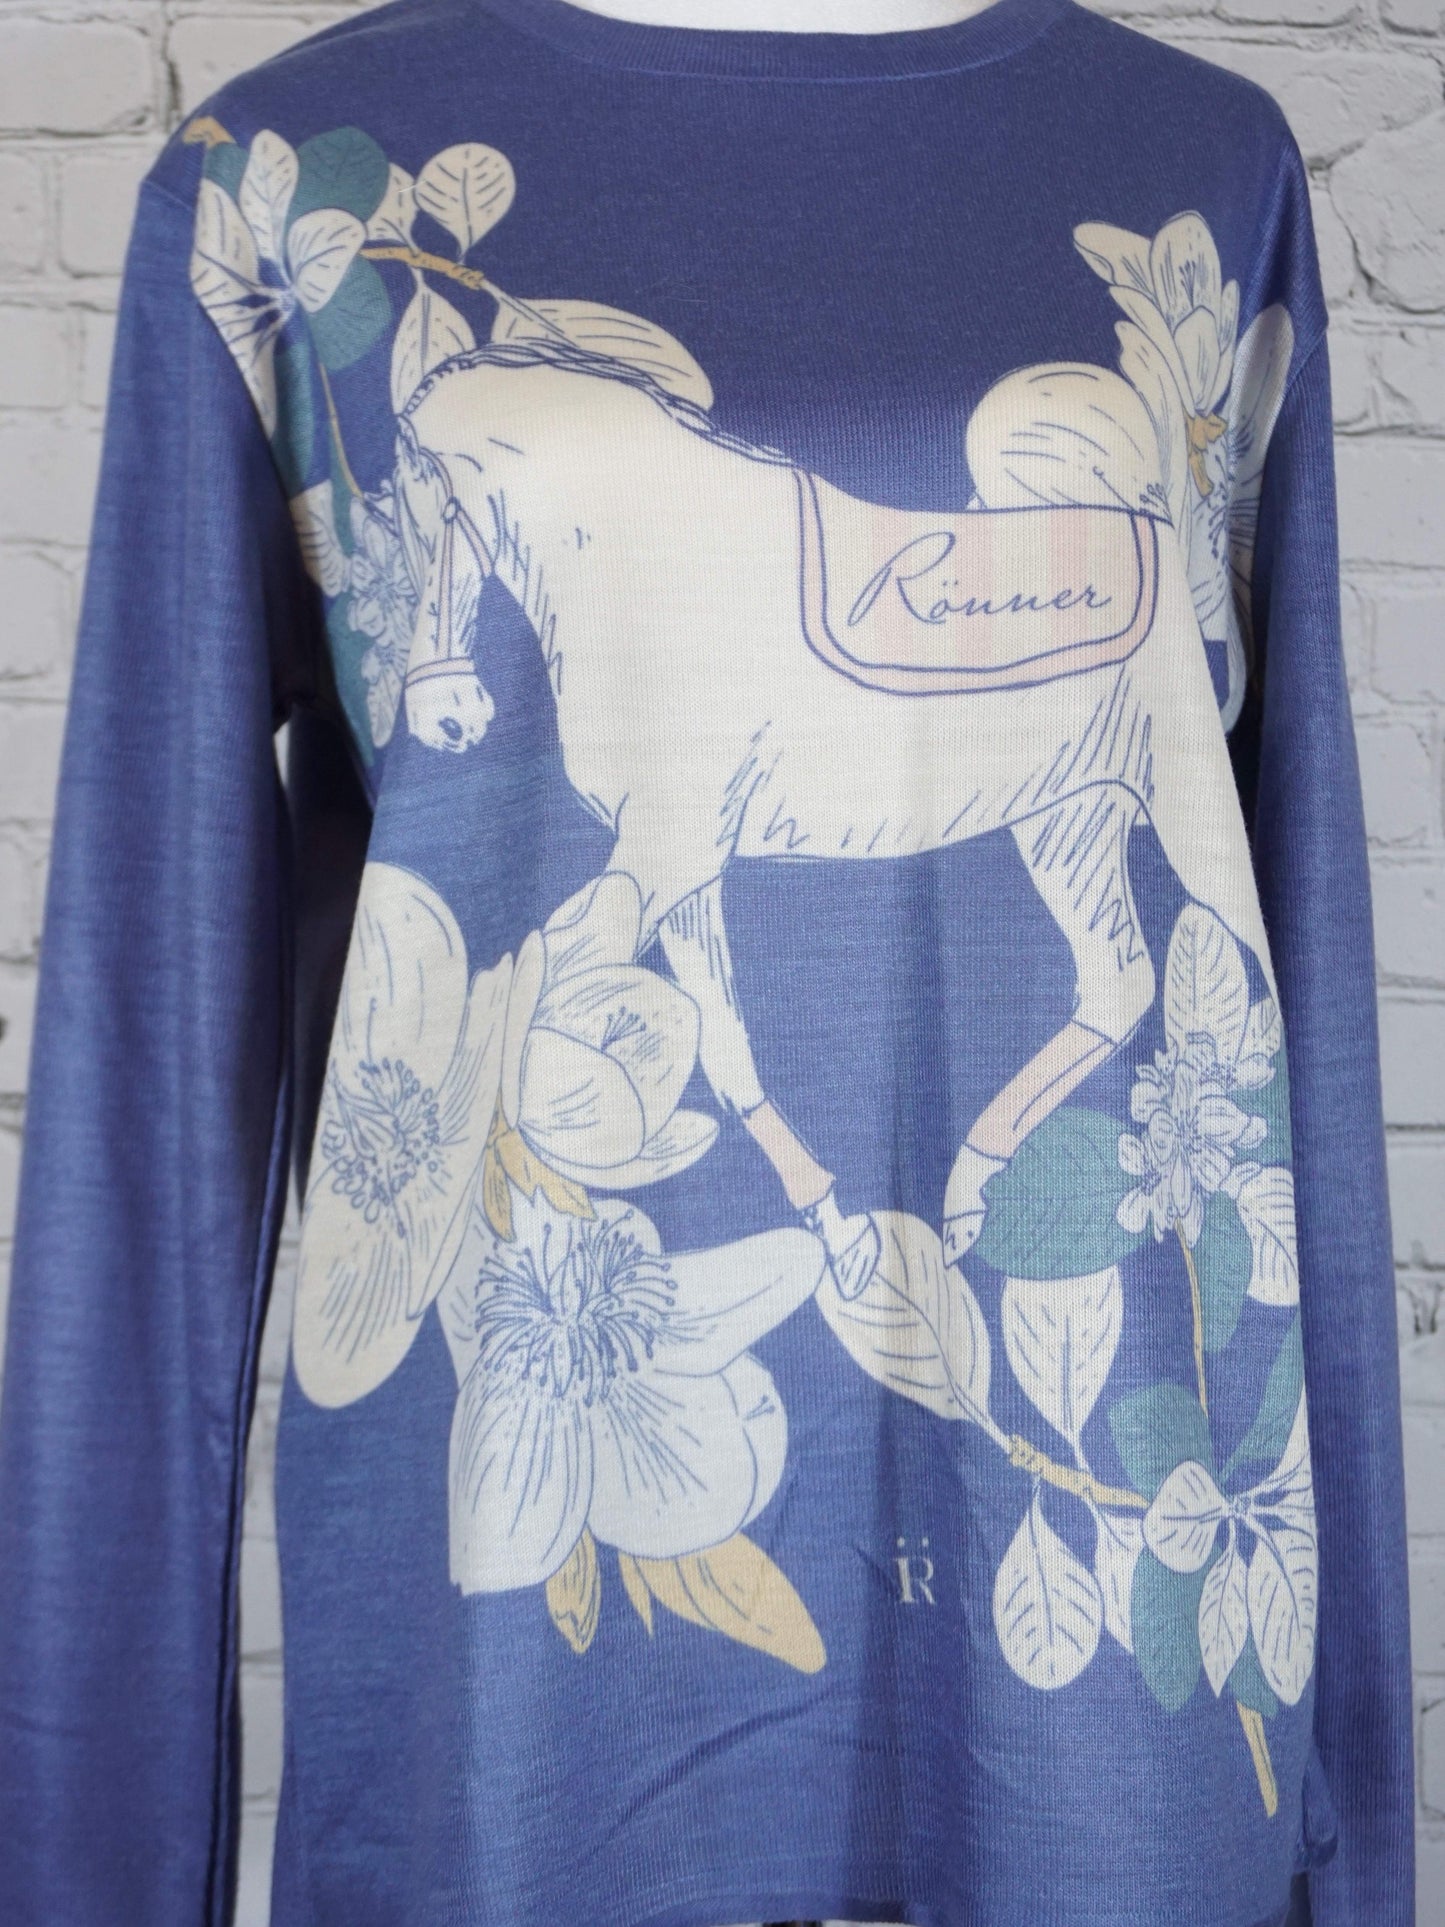 Ronner Design Blue Crewneck Sweater with Floral Horse Design - XL